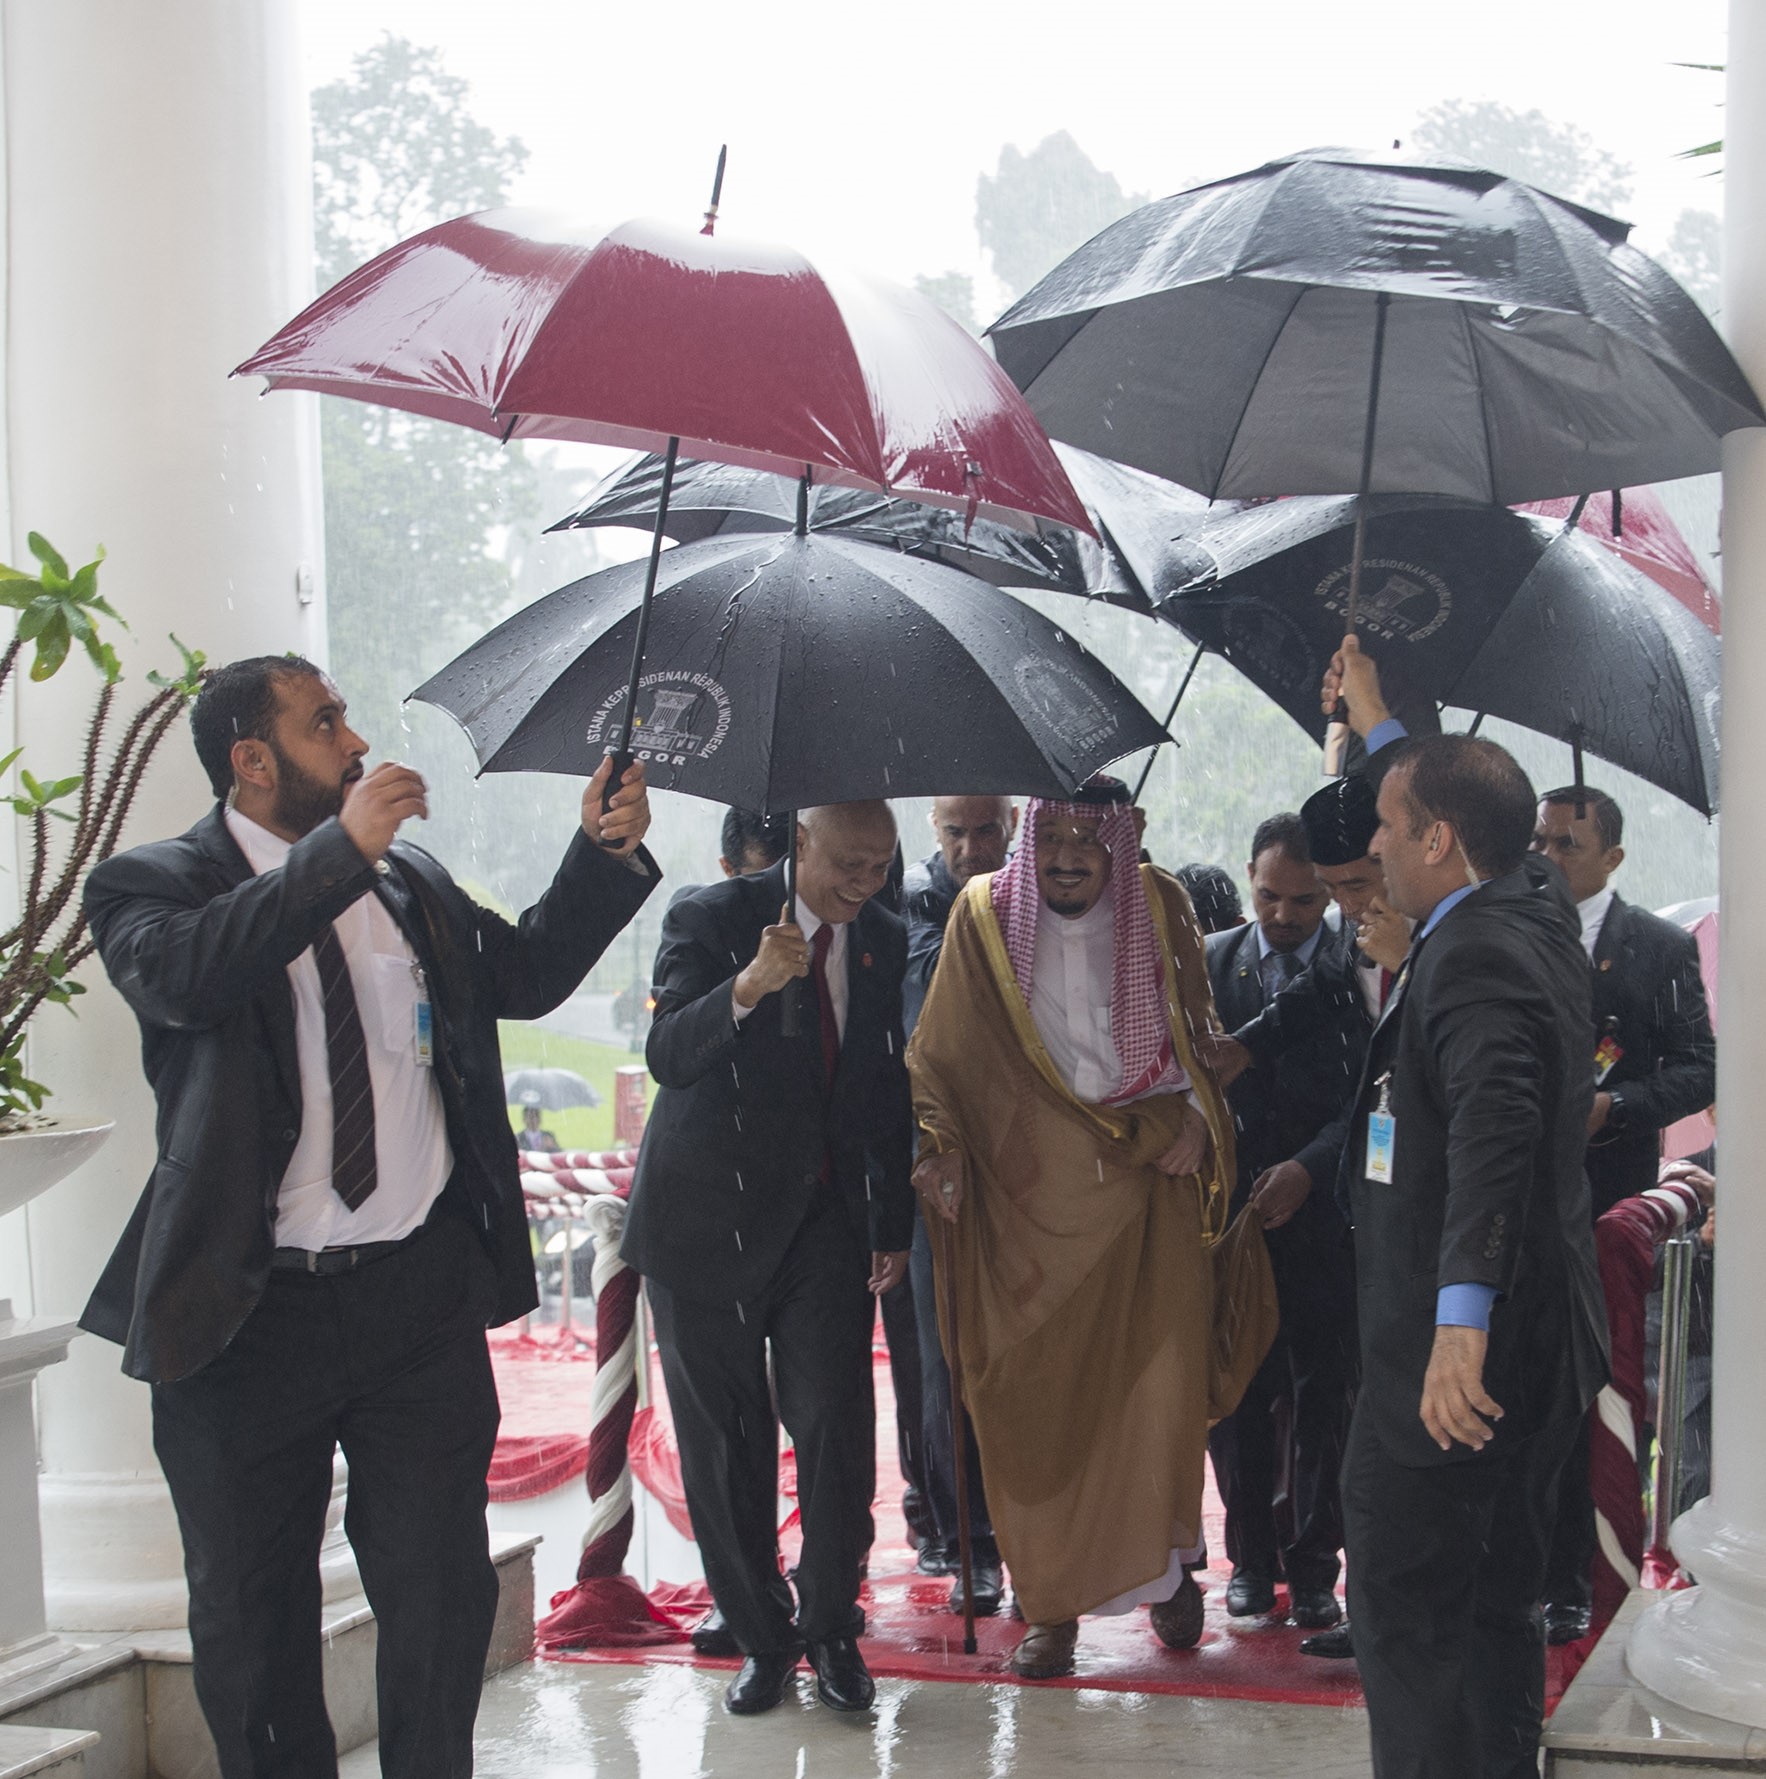 Фото: Bandar Algaloud / Saudi Kingdom Council / Handout/Anadolu Agency/Getty Images